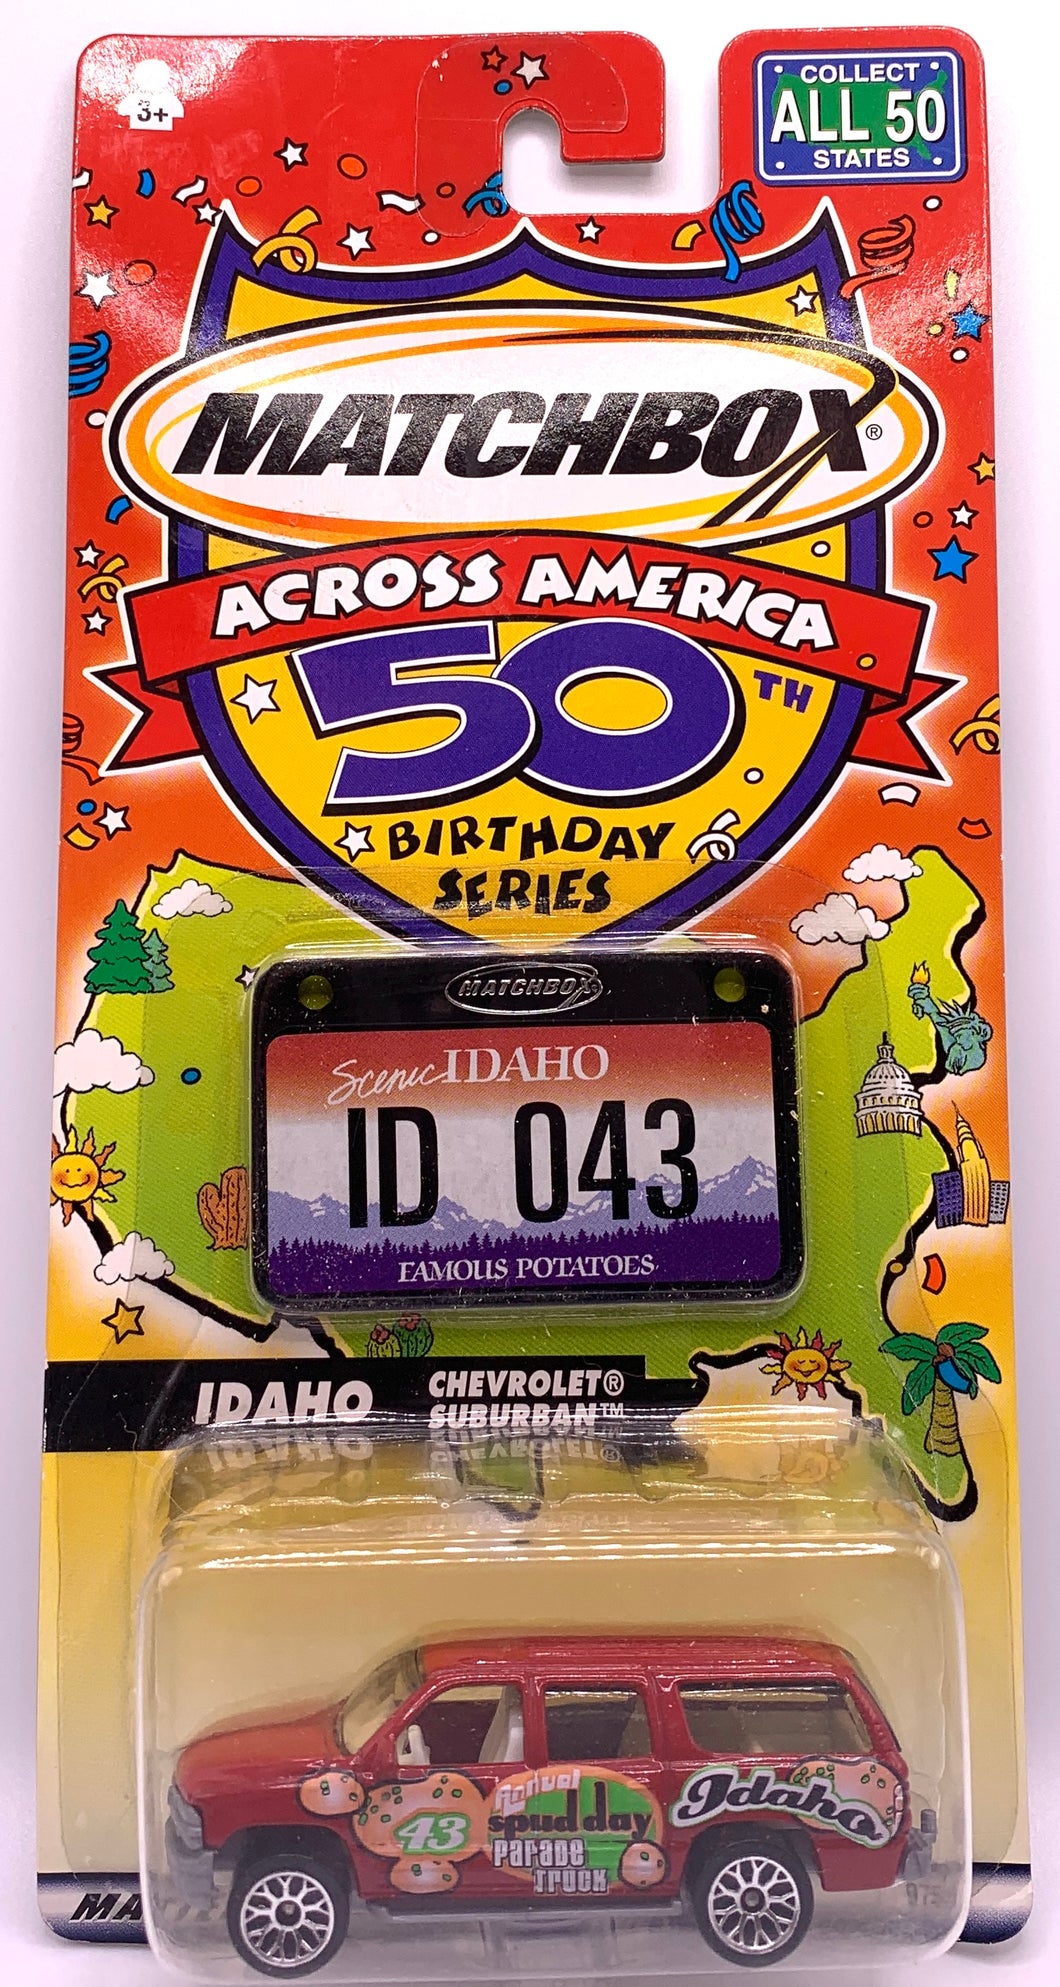 IDAHO Annual Spud Day Parade Truck 1/76 Matchbox Across America 50th Birthday Series